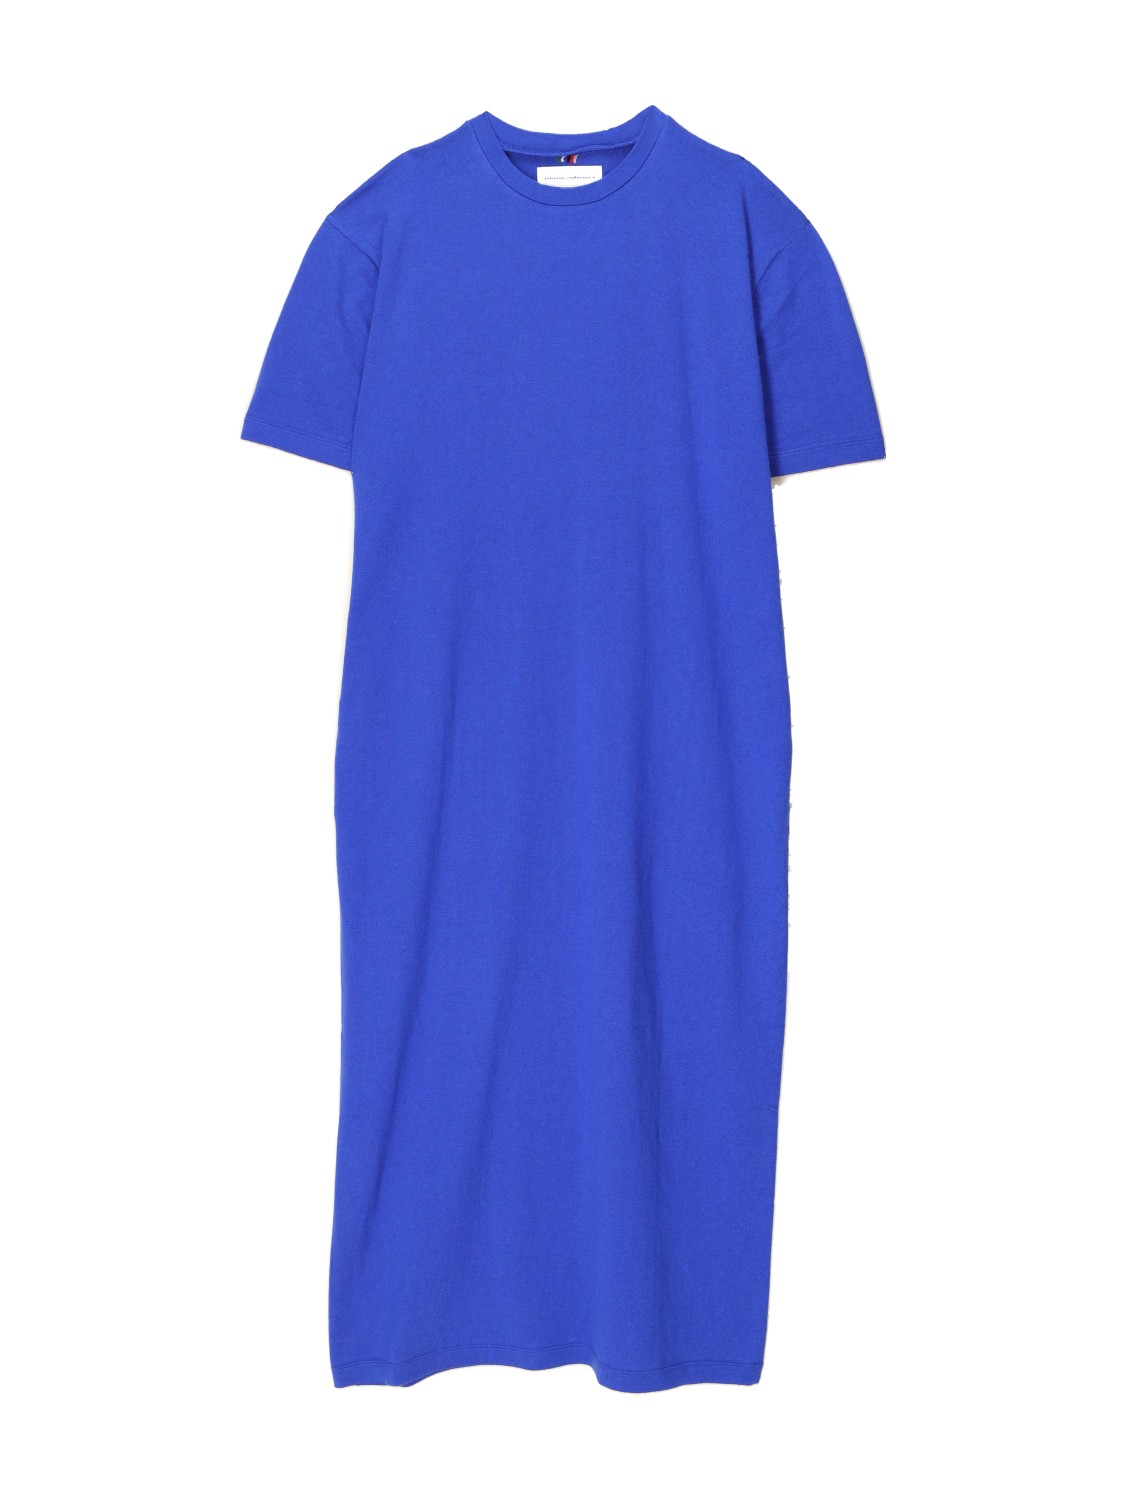 N°321 Kris - Oversized T-shirt dress in cashmere-cotton blend 